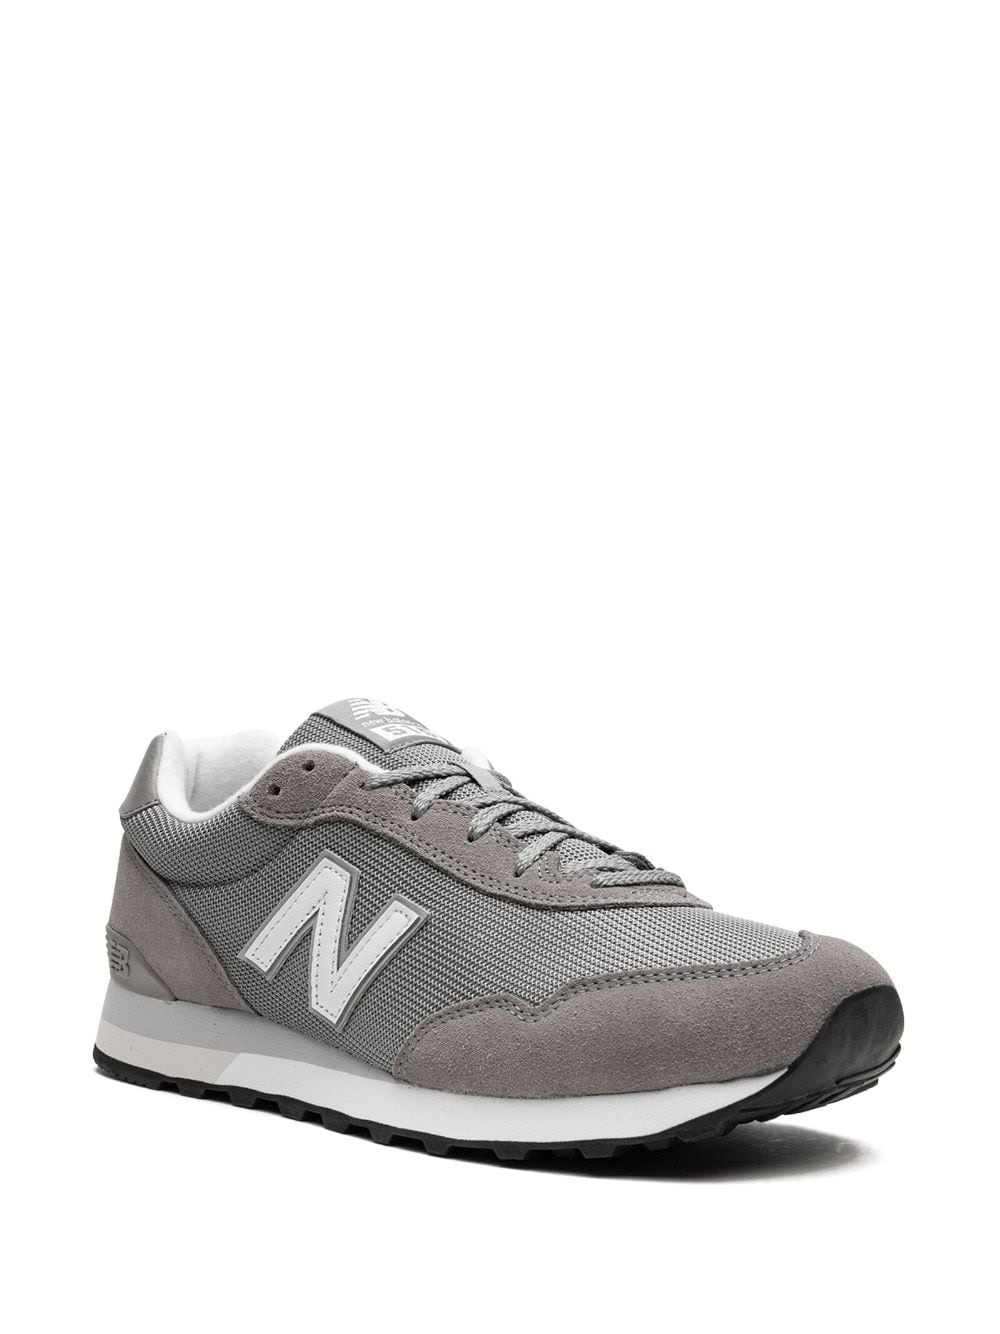 Shop New Balance 515 "grey/white" Sneakers